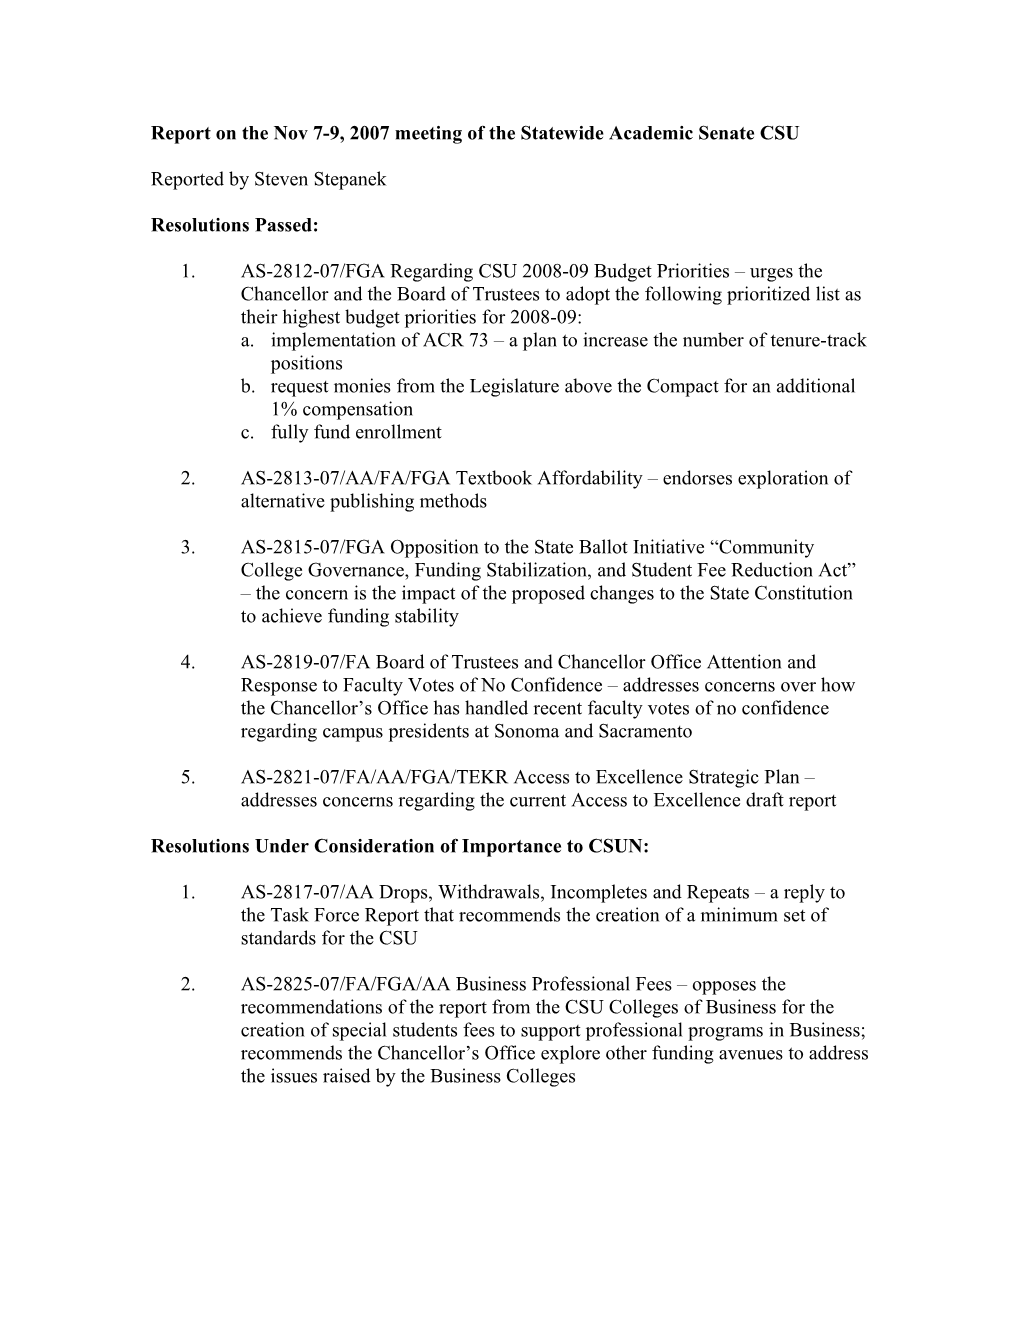 Report on the Nov 7-9, 2007 Meetings for the Academic Senate CSU